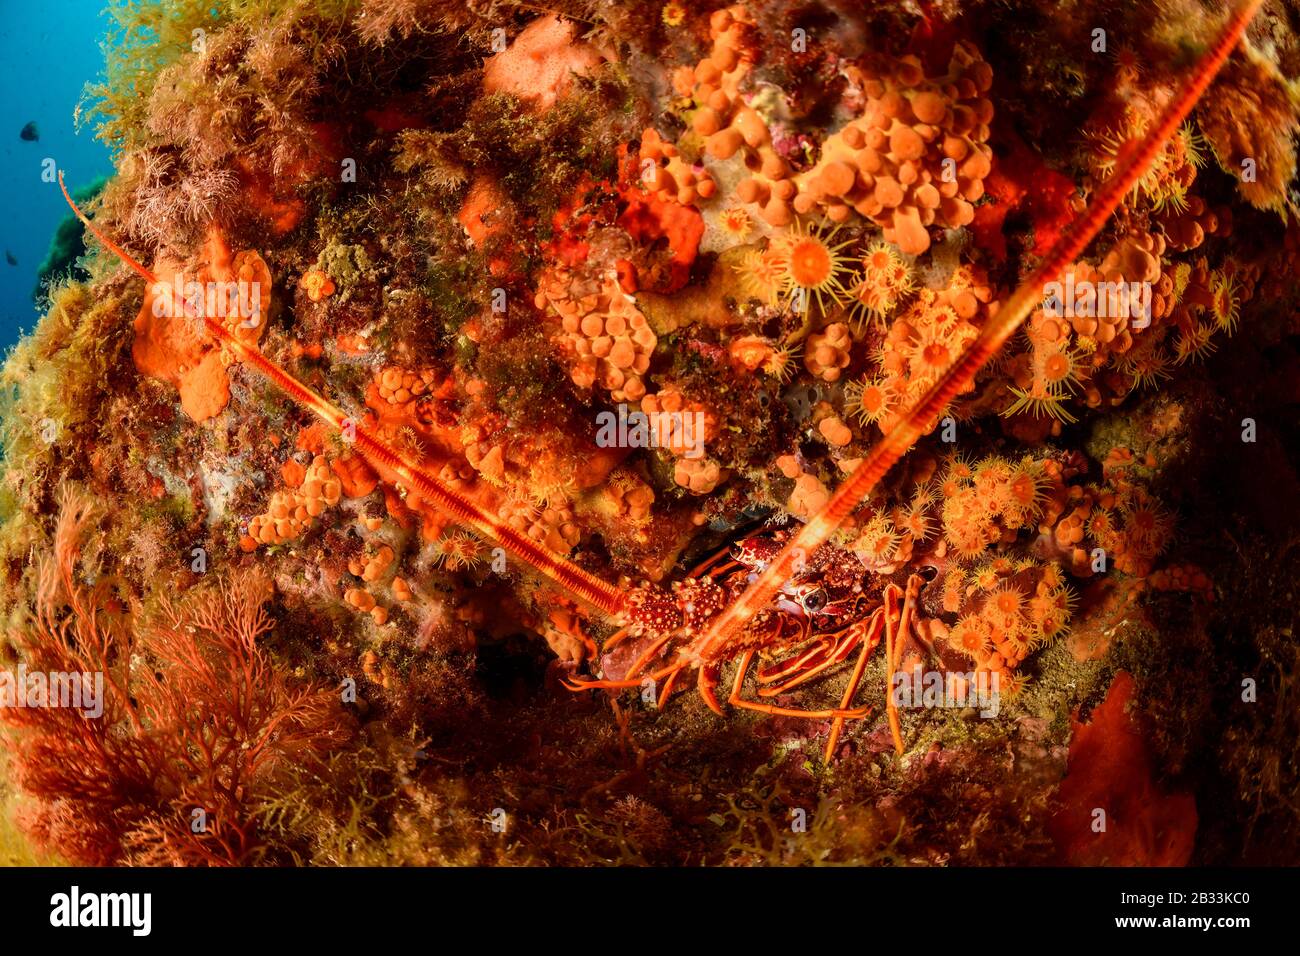 Aragosta spinosa europea, Palinurus elephas, nella colorata barriera corallina mediterranea, Tamariu, Costa Brava, Spagna, Mar Mediterraneo Foto Stock